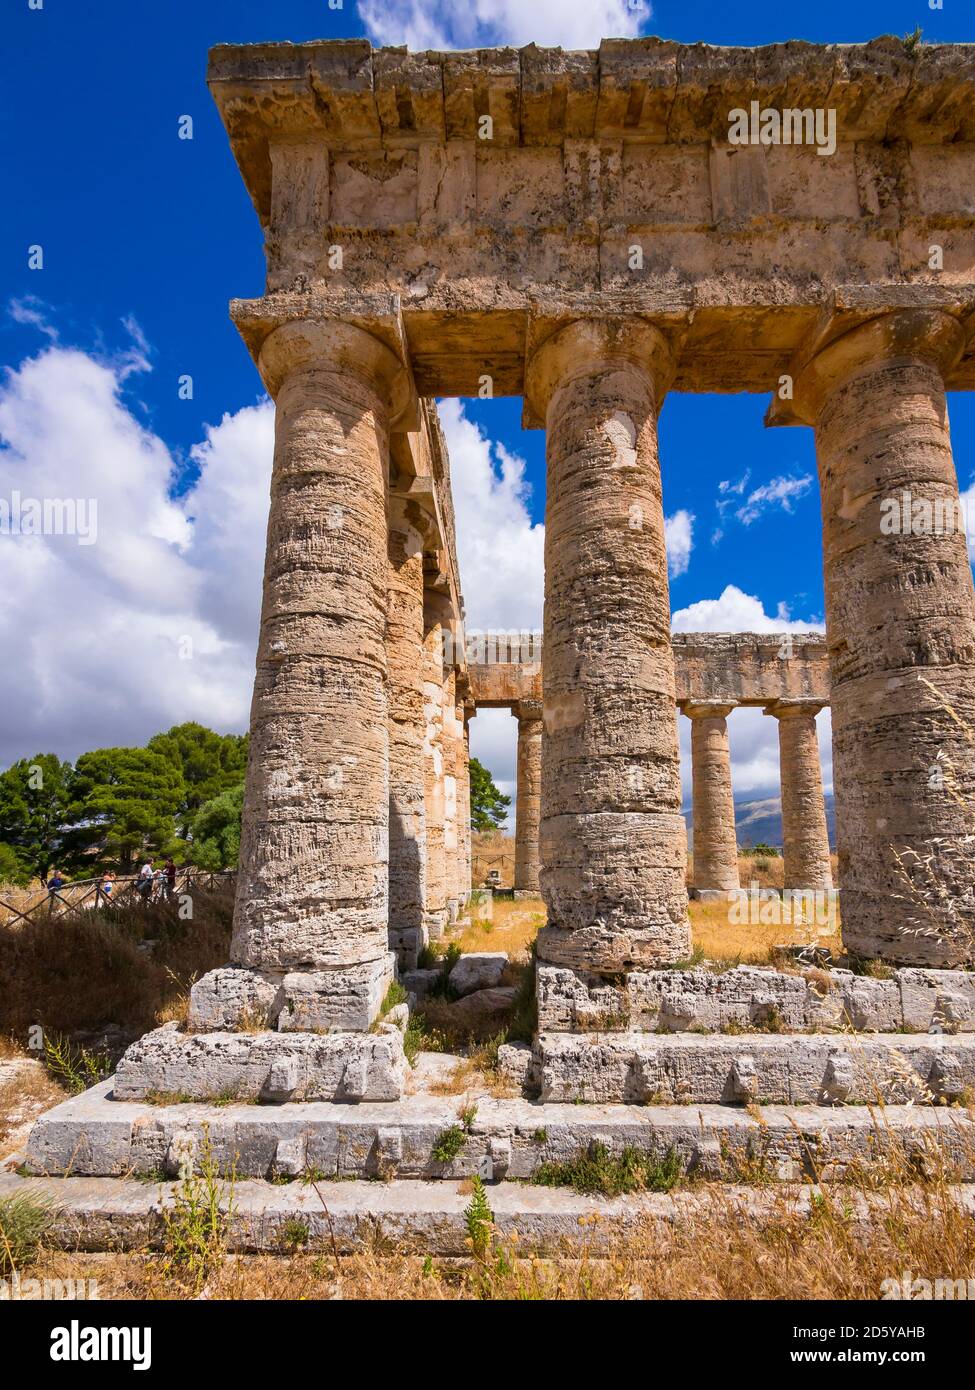 Italy, Sicily, Calatafimi, columns of the Doric temple of Segesta Stock Photo